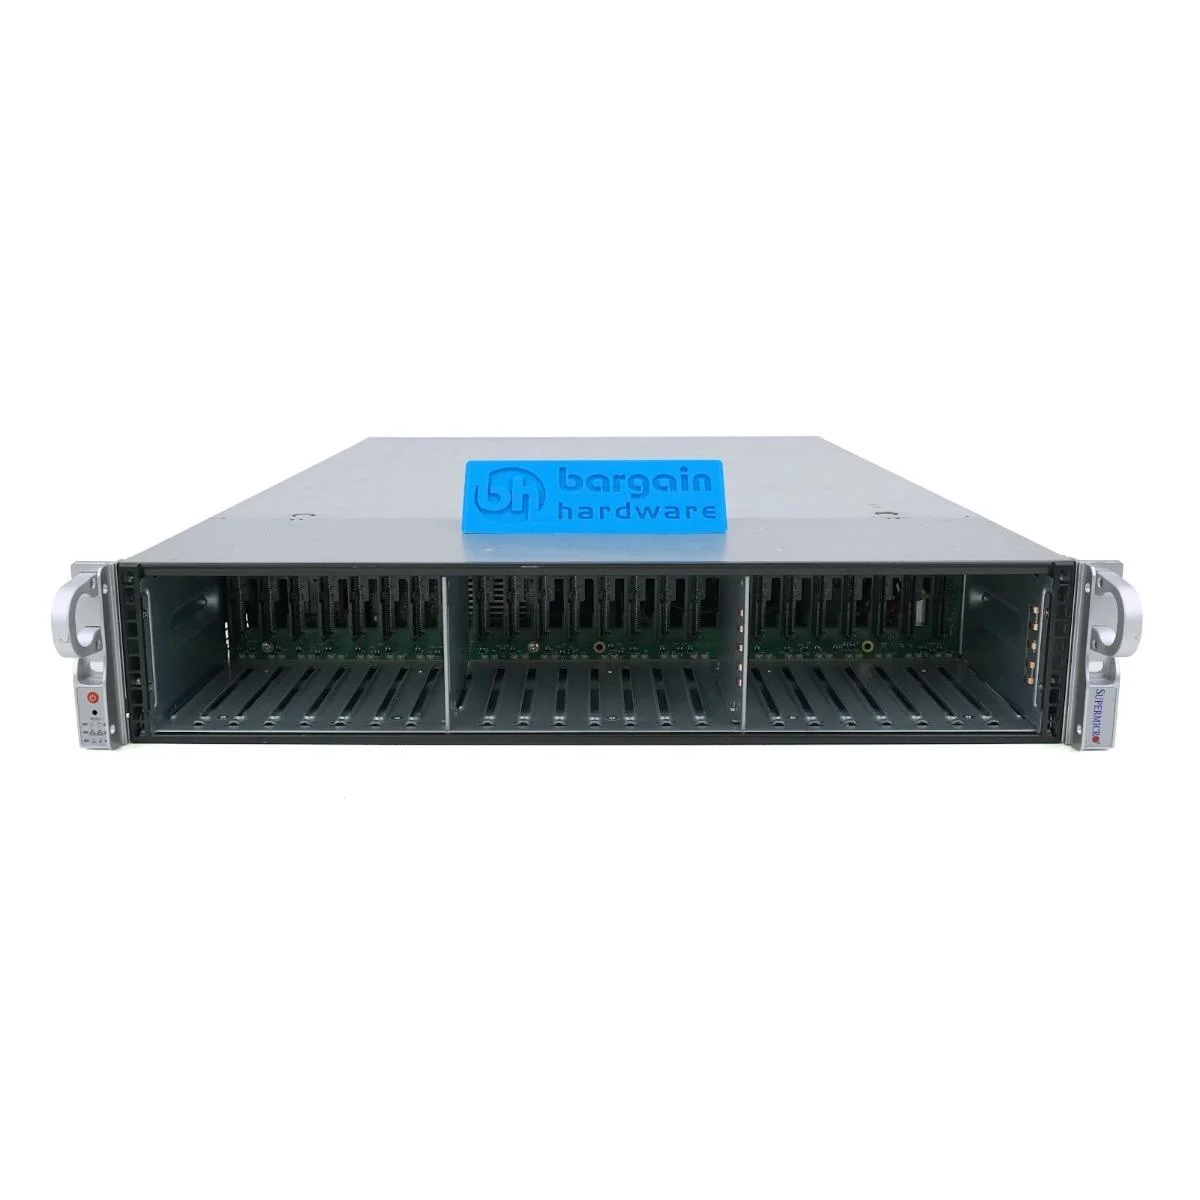 Supermicro CSE-216 X10DRi-T4+ 2U Rack Server